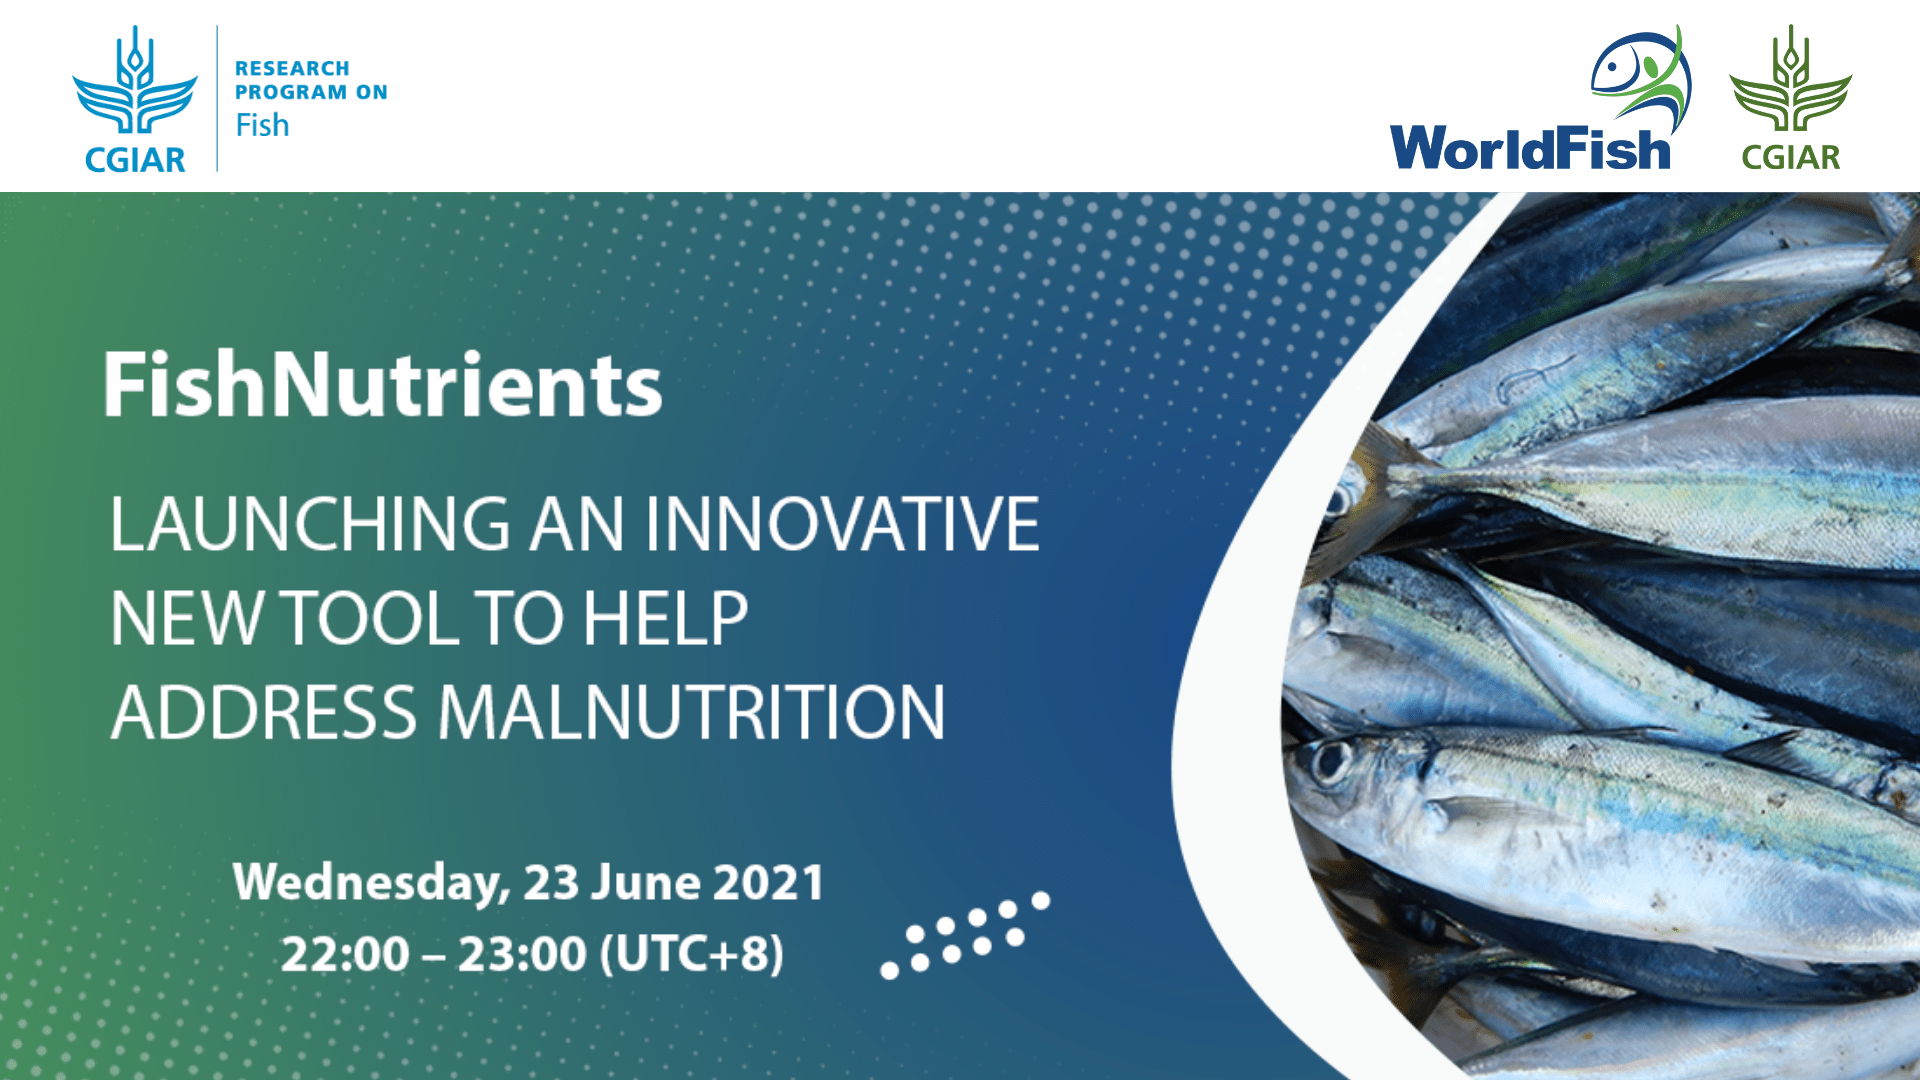 FishNutrients - Launching an innovative new tool to help address malnutrition